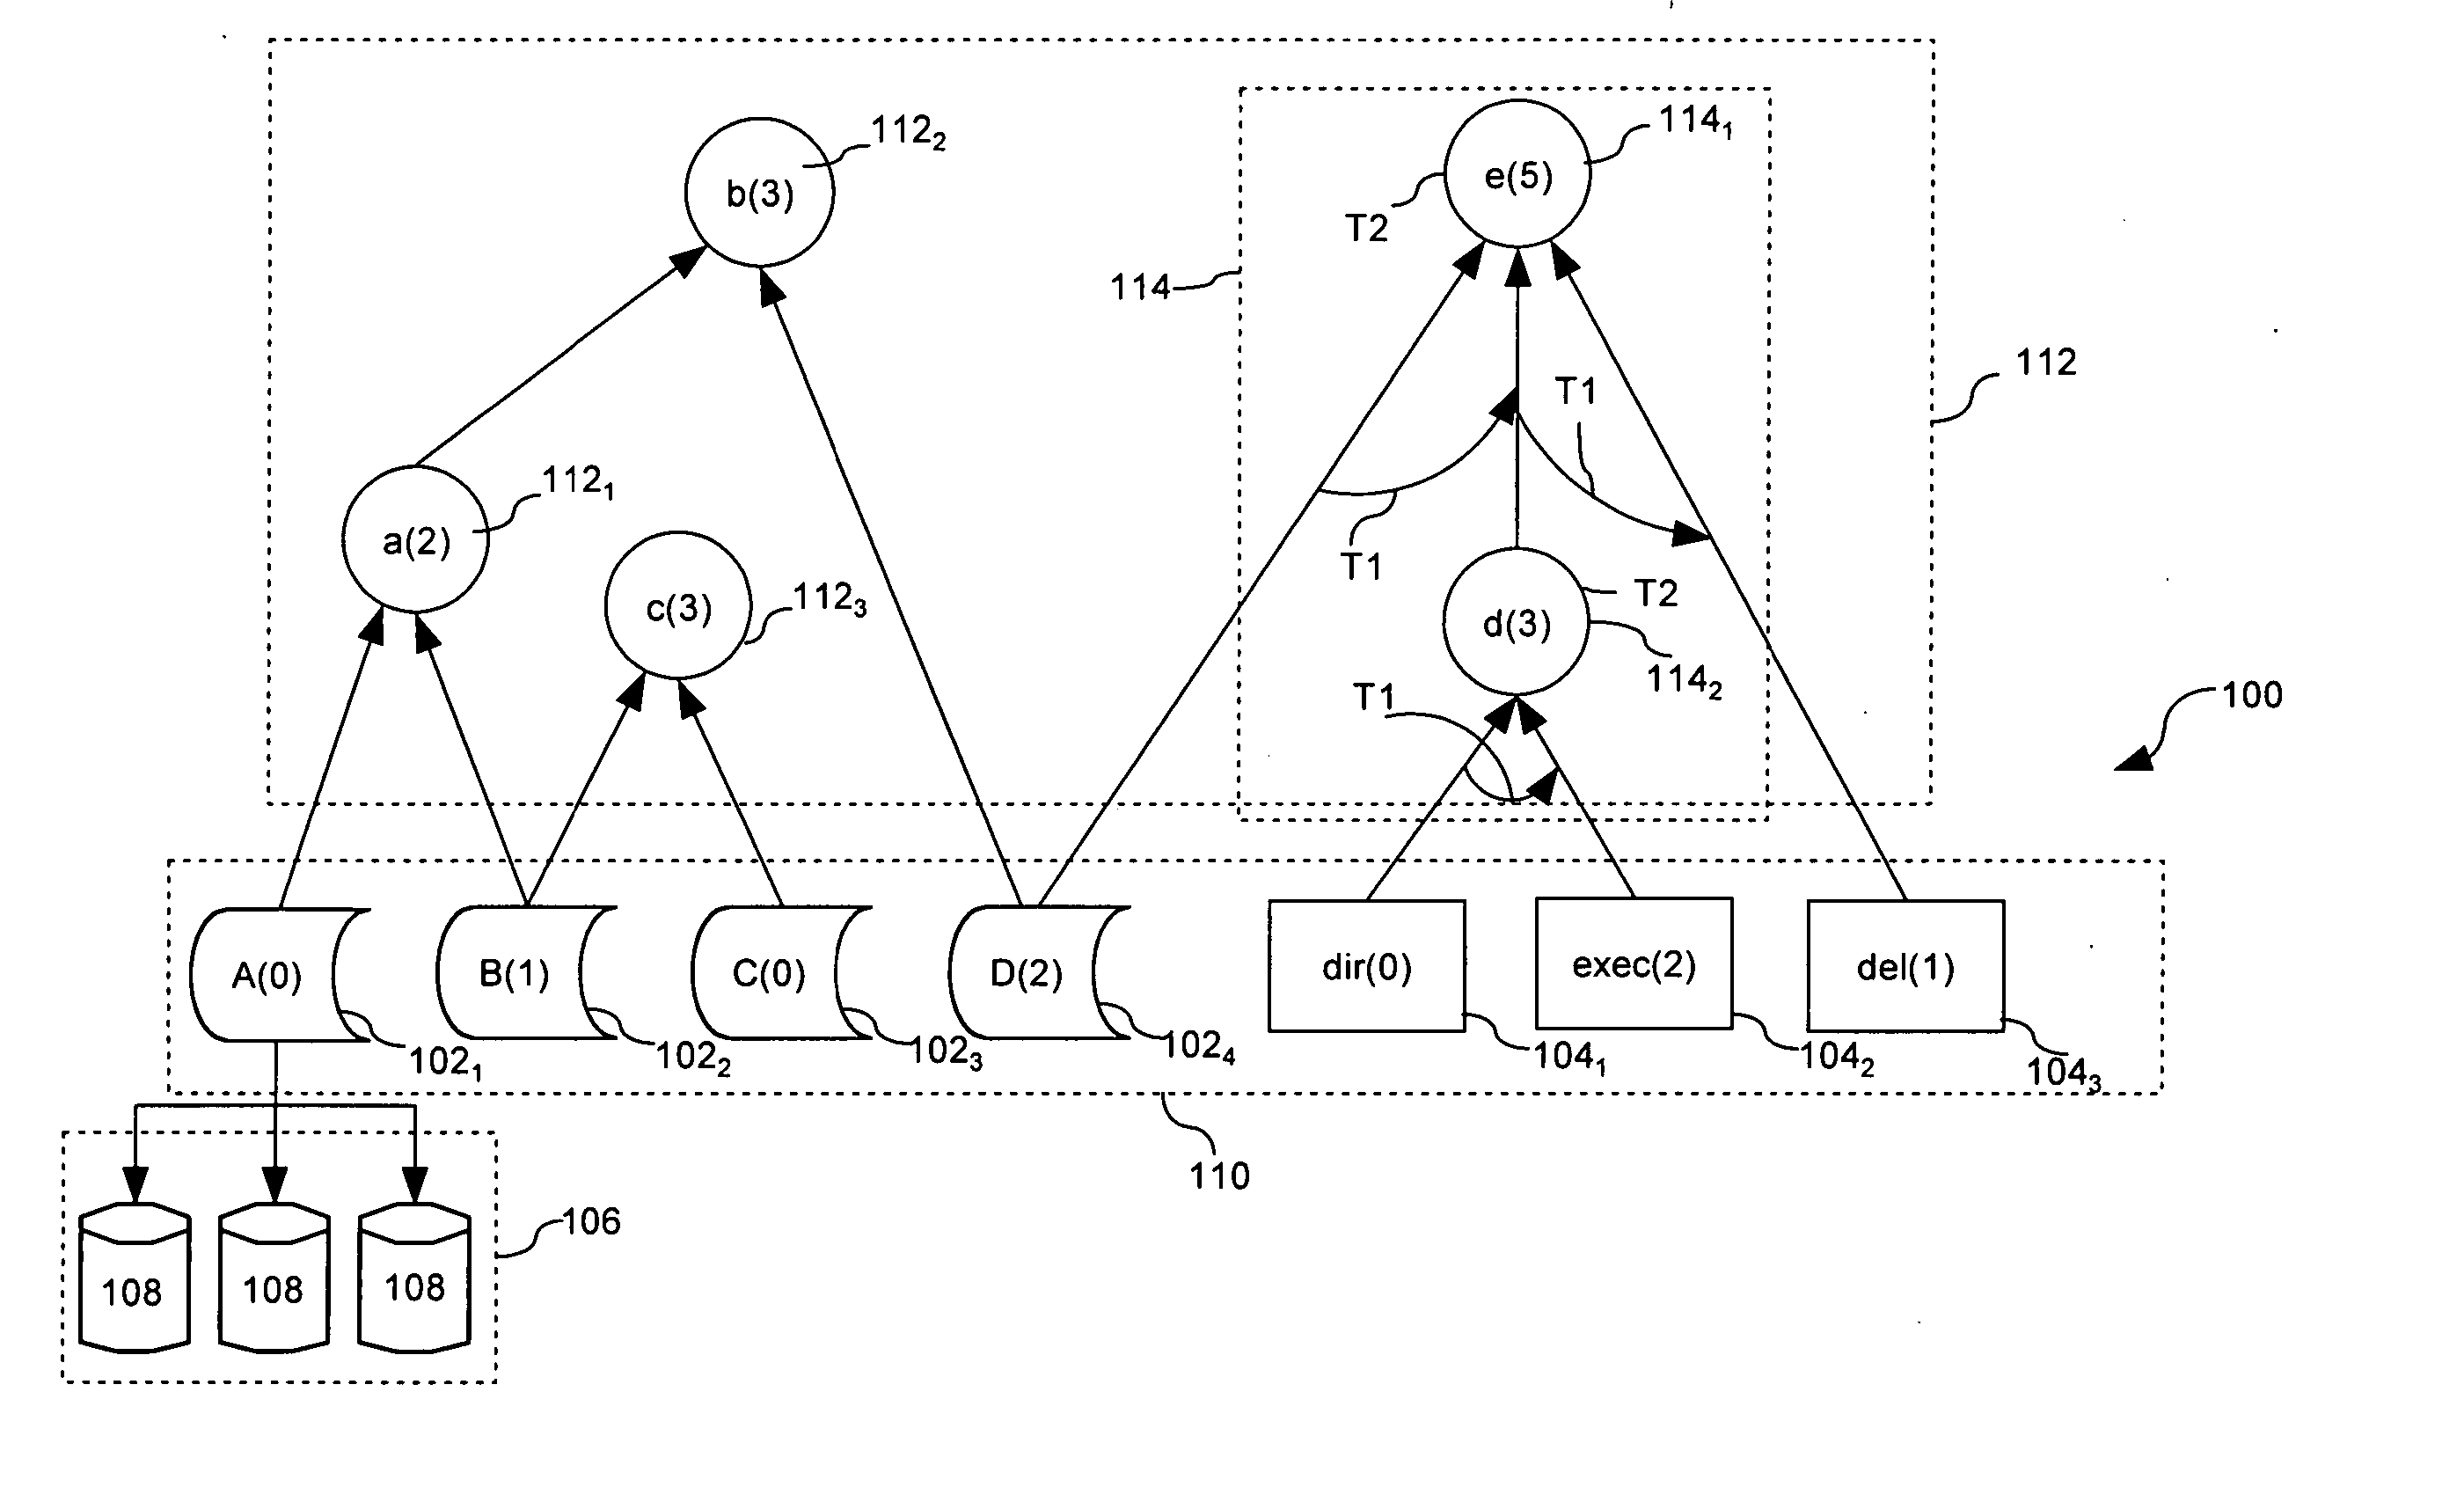 Enforcing computer security utilizing an adaptive lattice mechanism